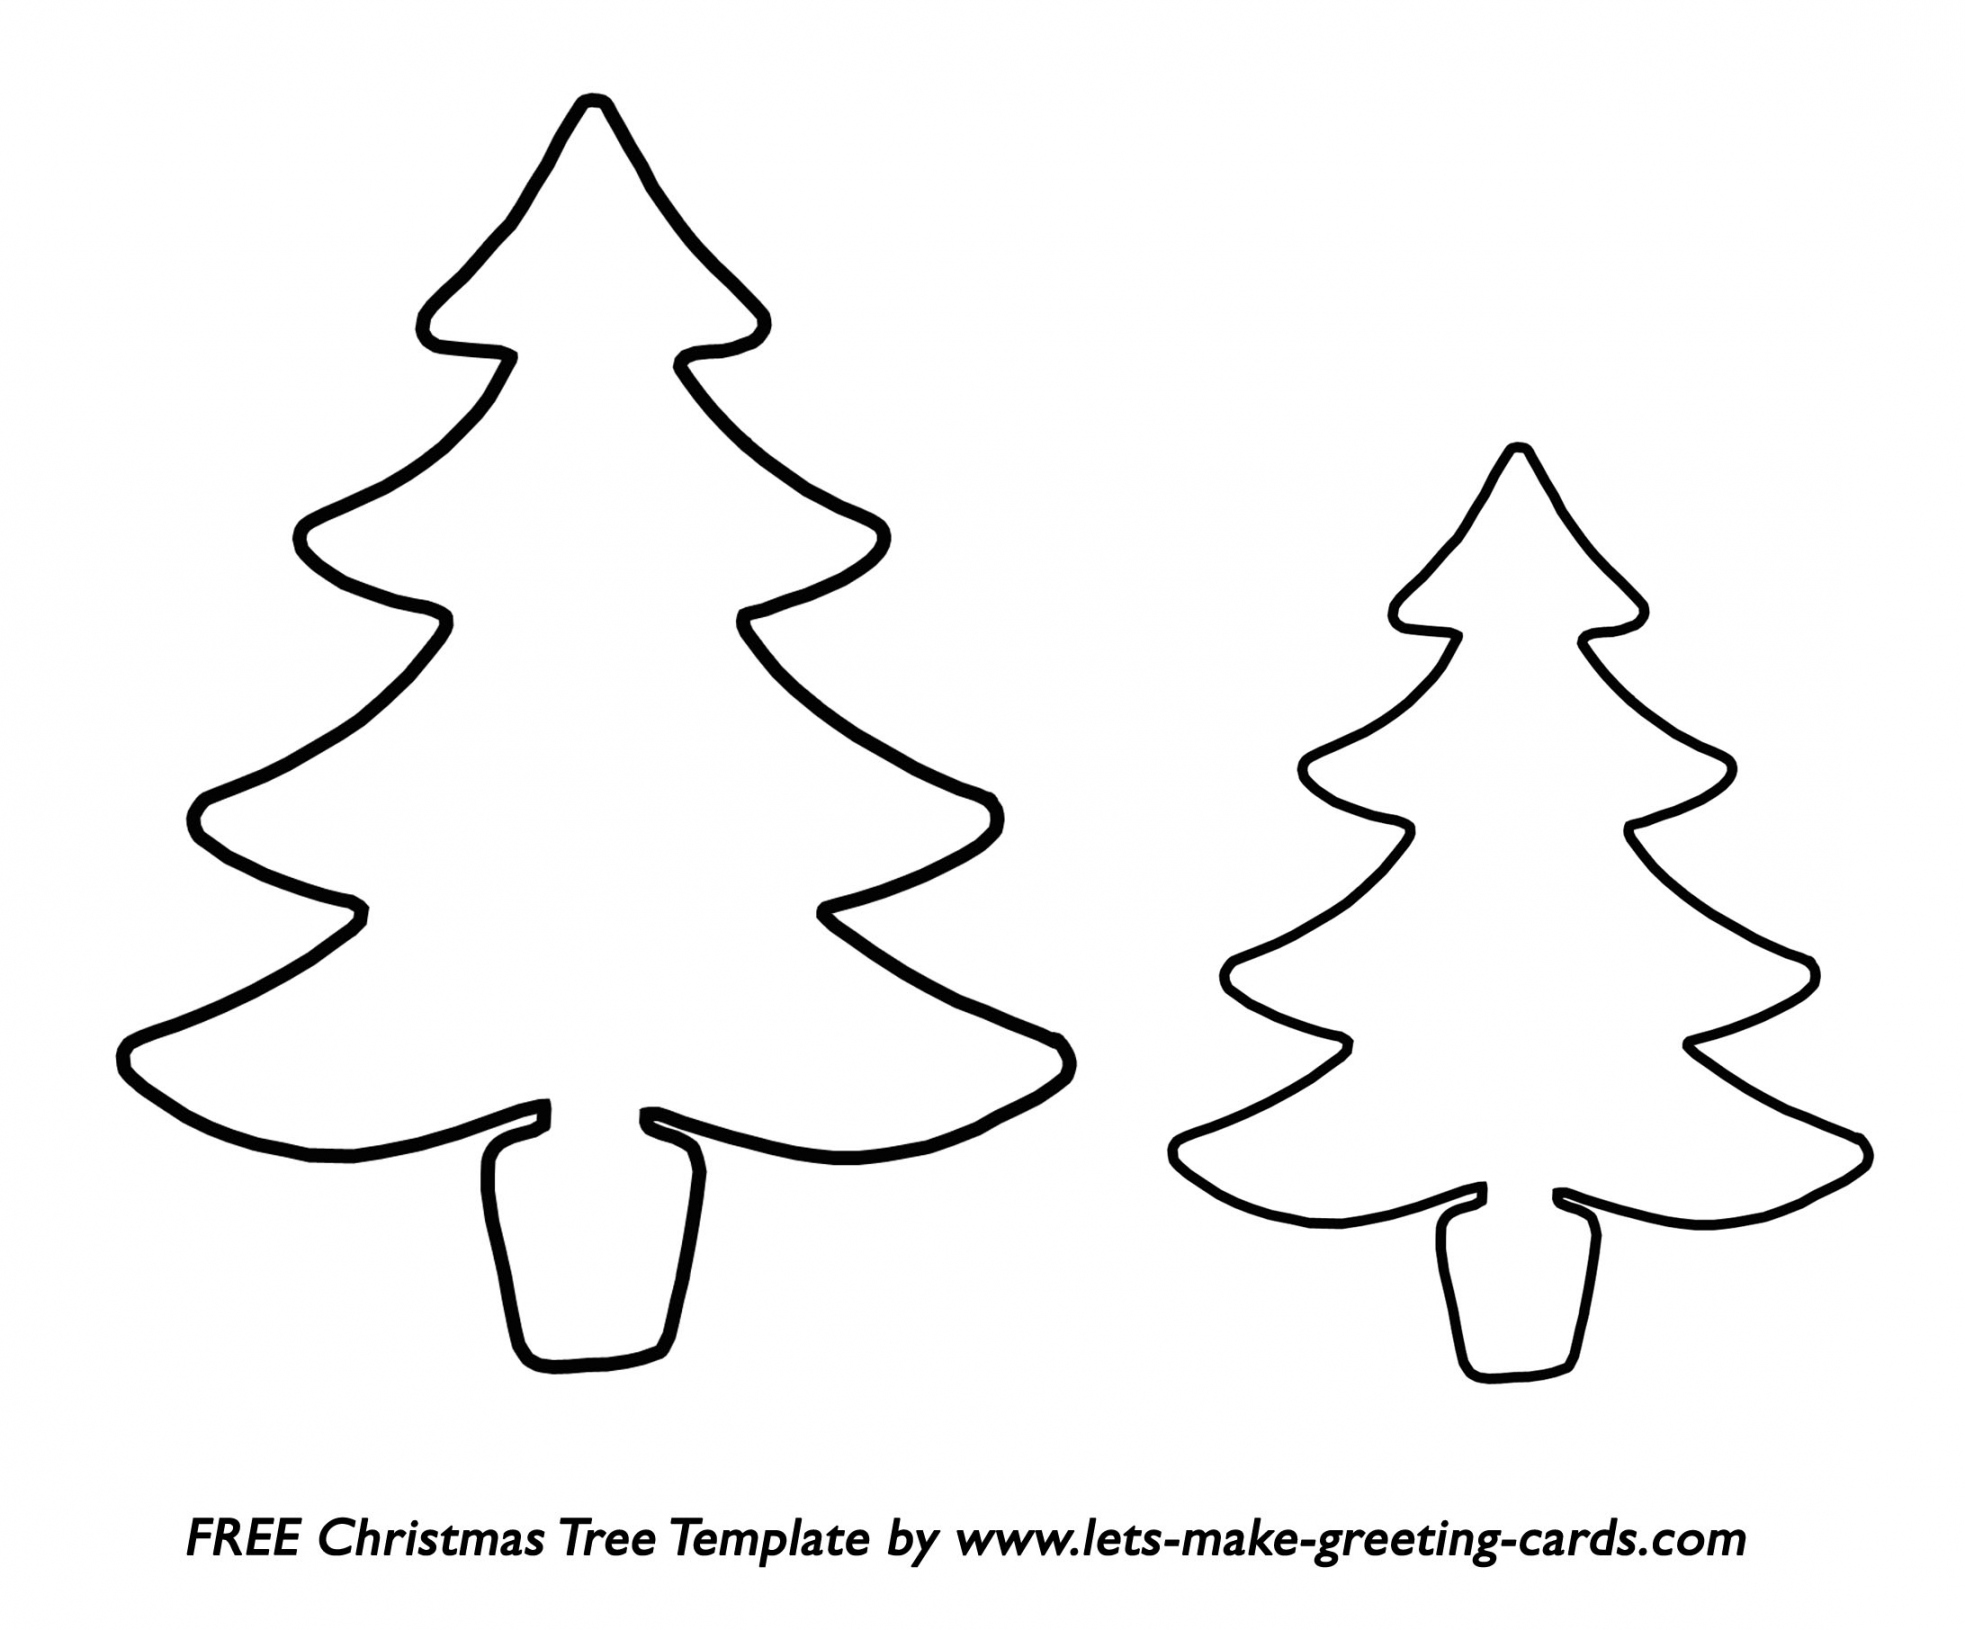 Free Christmas Tree Templates - FREE Printables - Christmas Tree Template Free